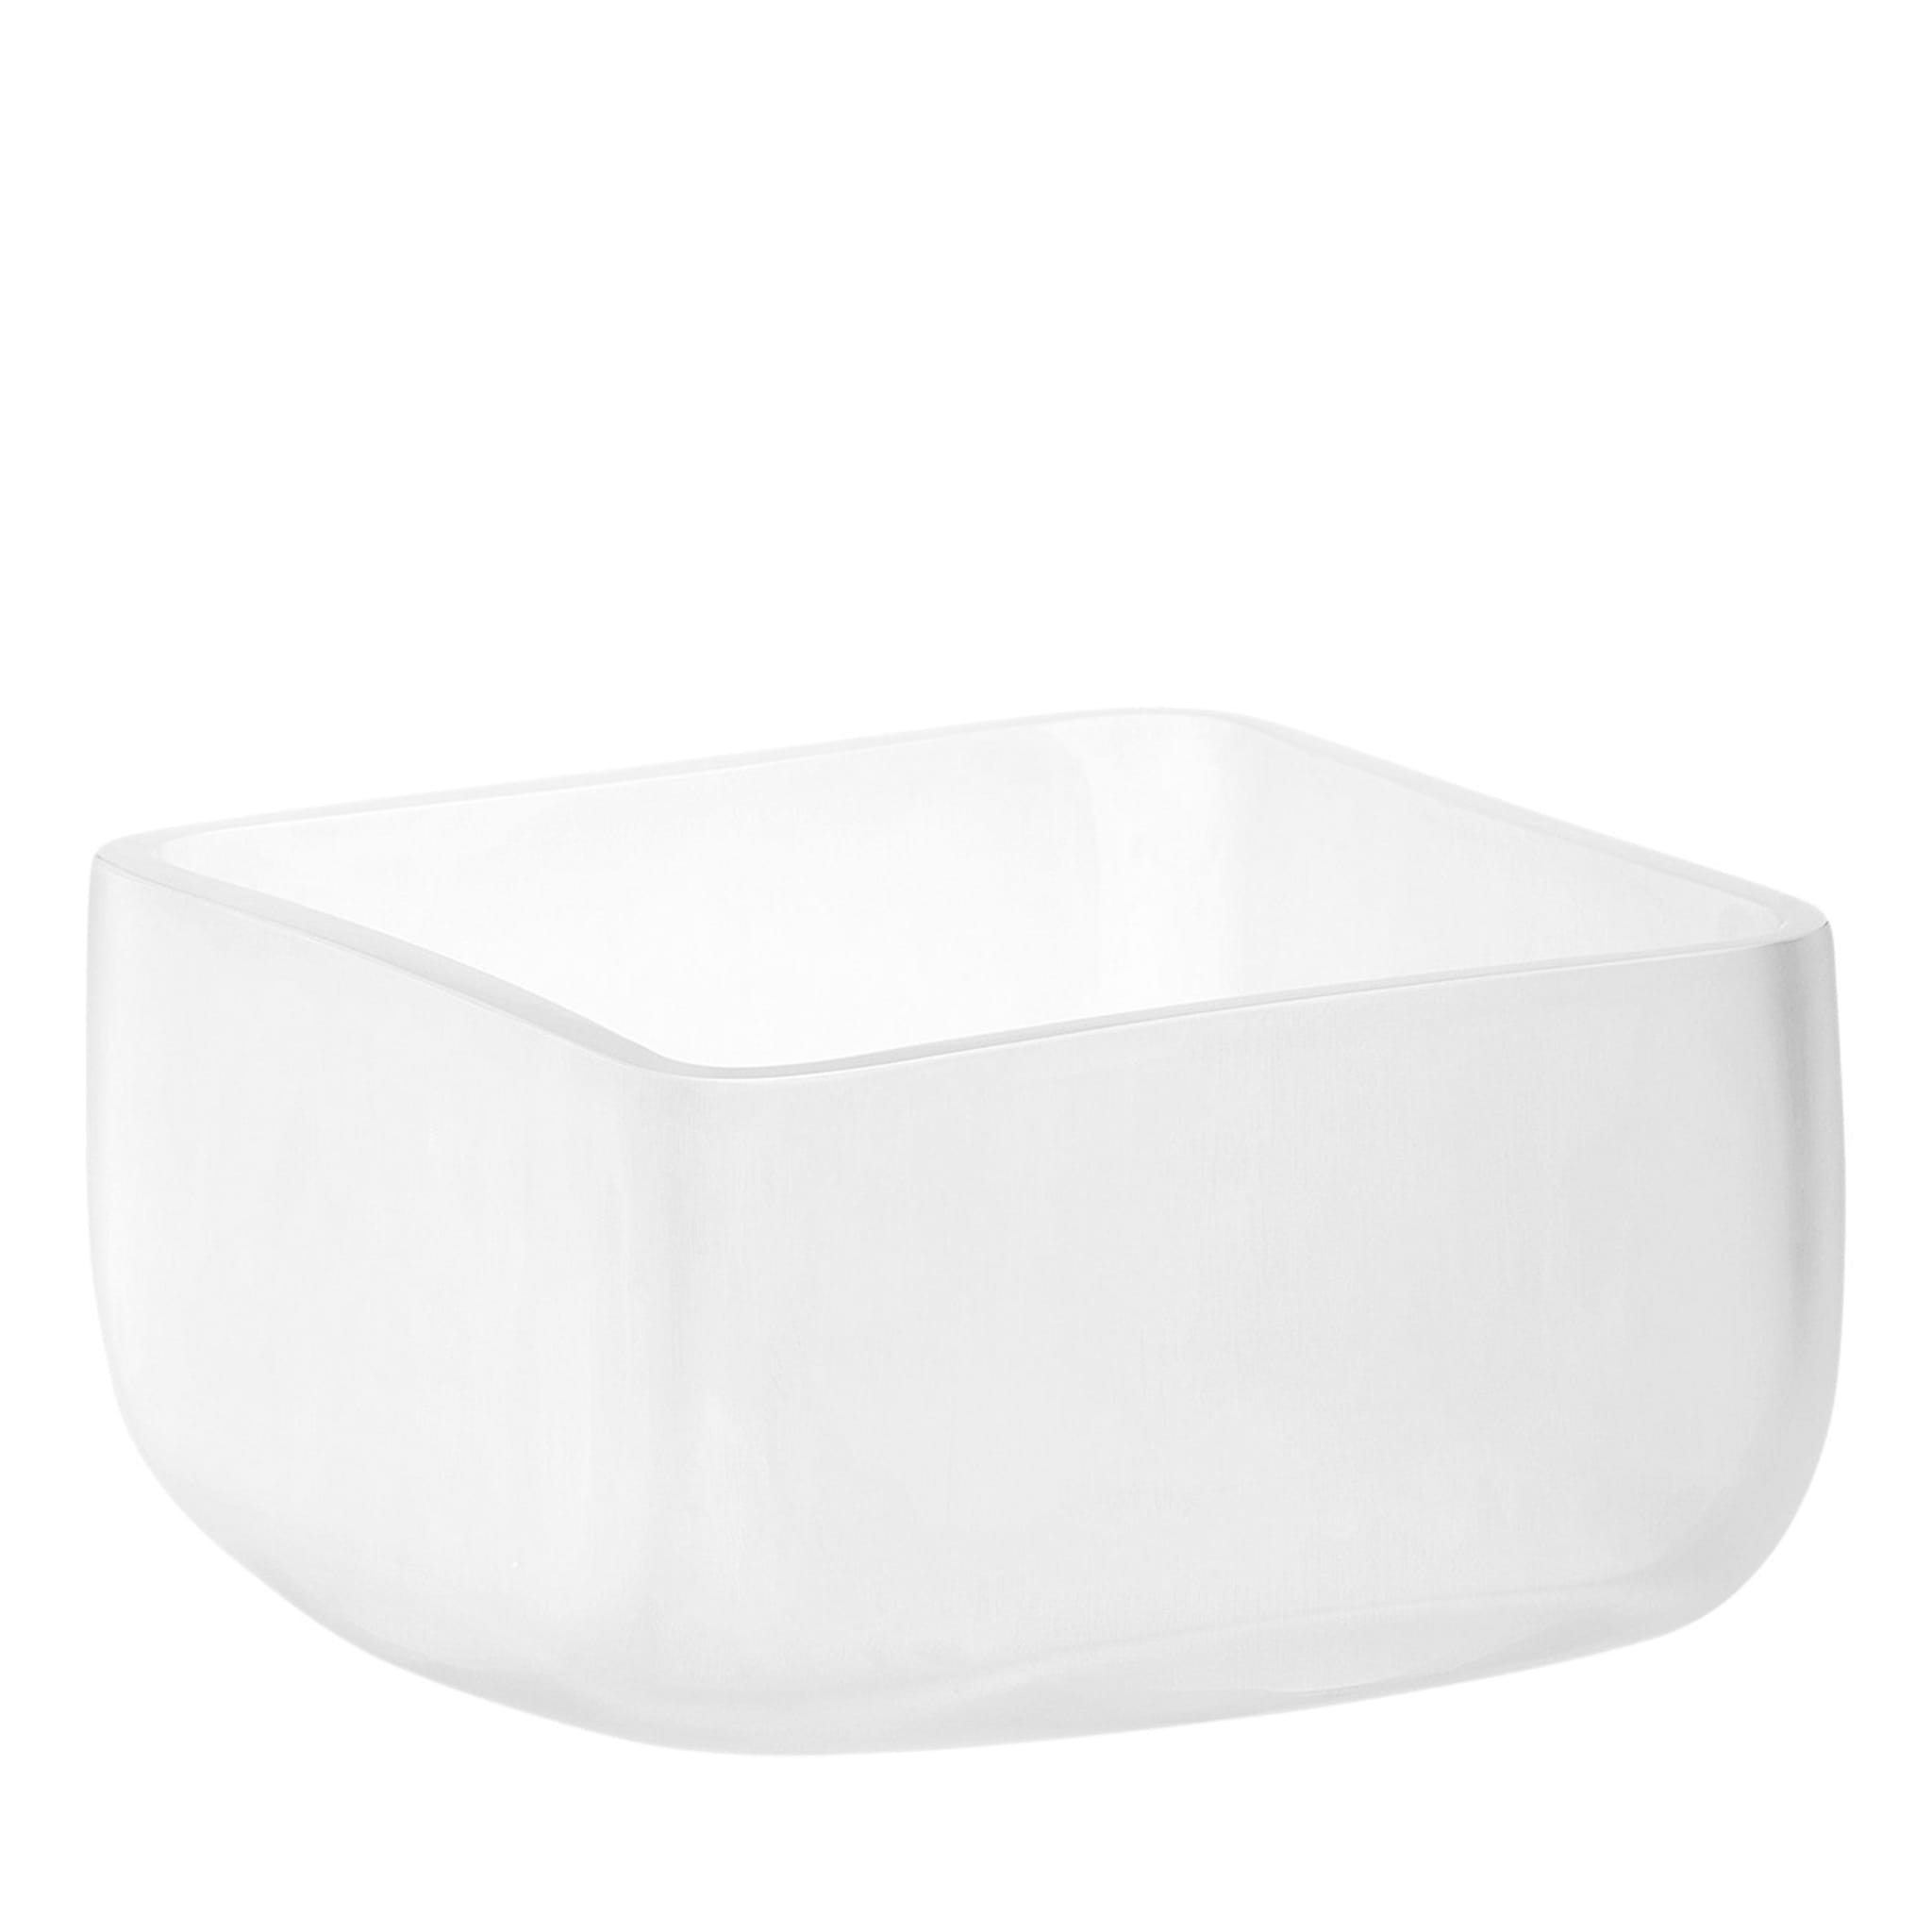 Cubes White Bowl by LPKW - Main view